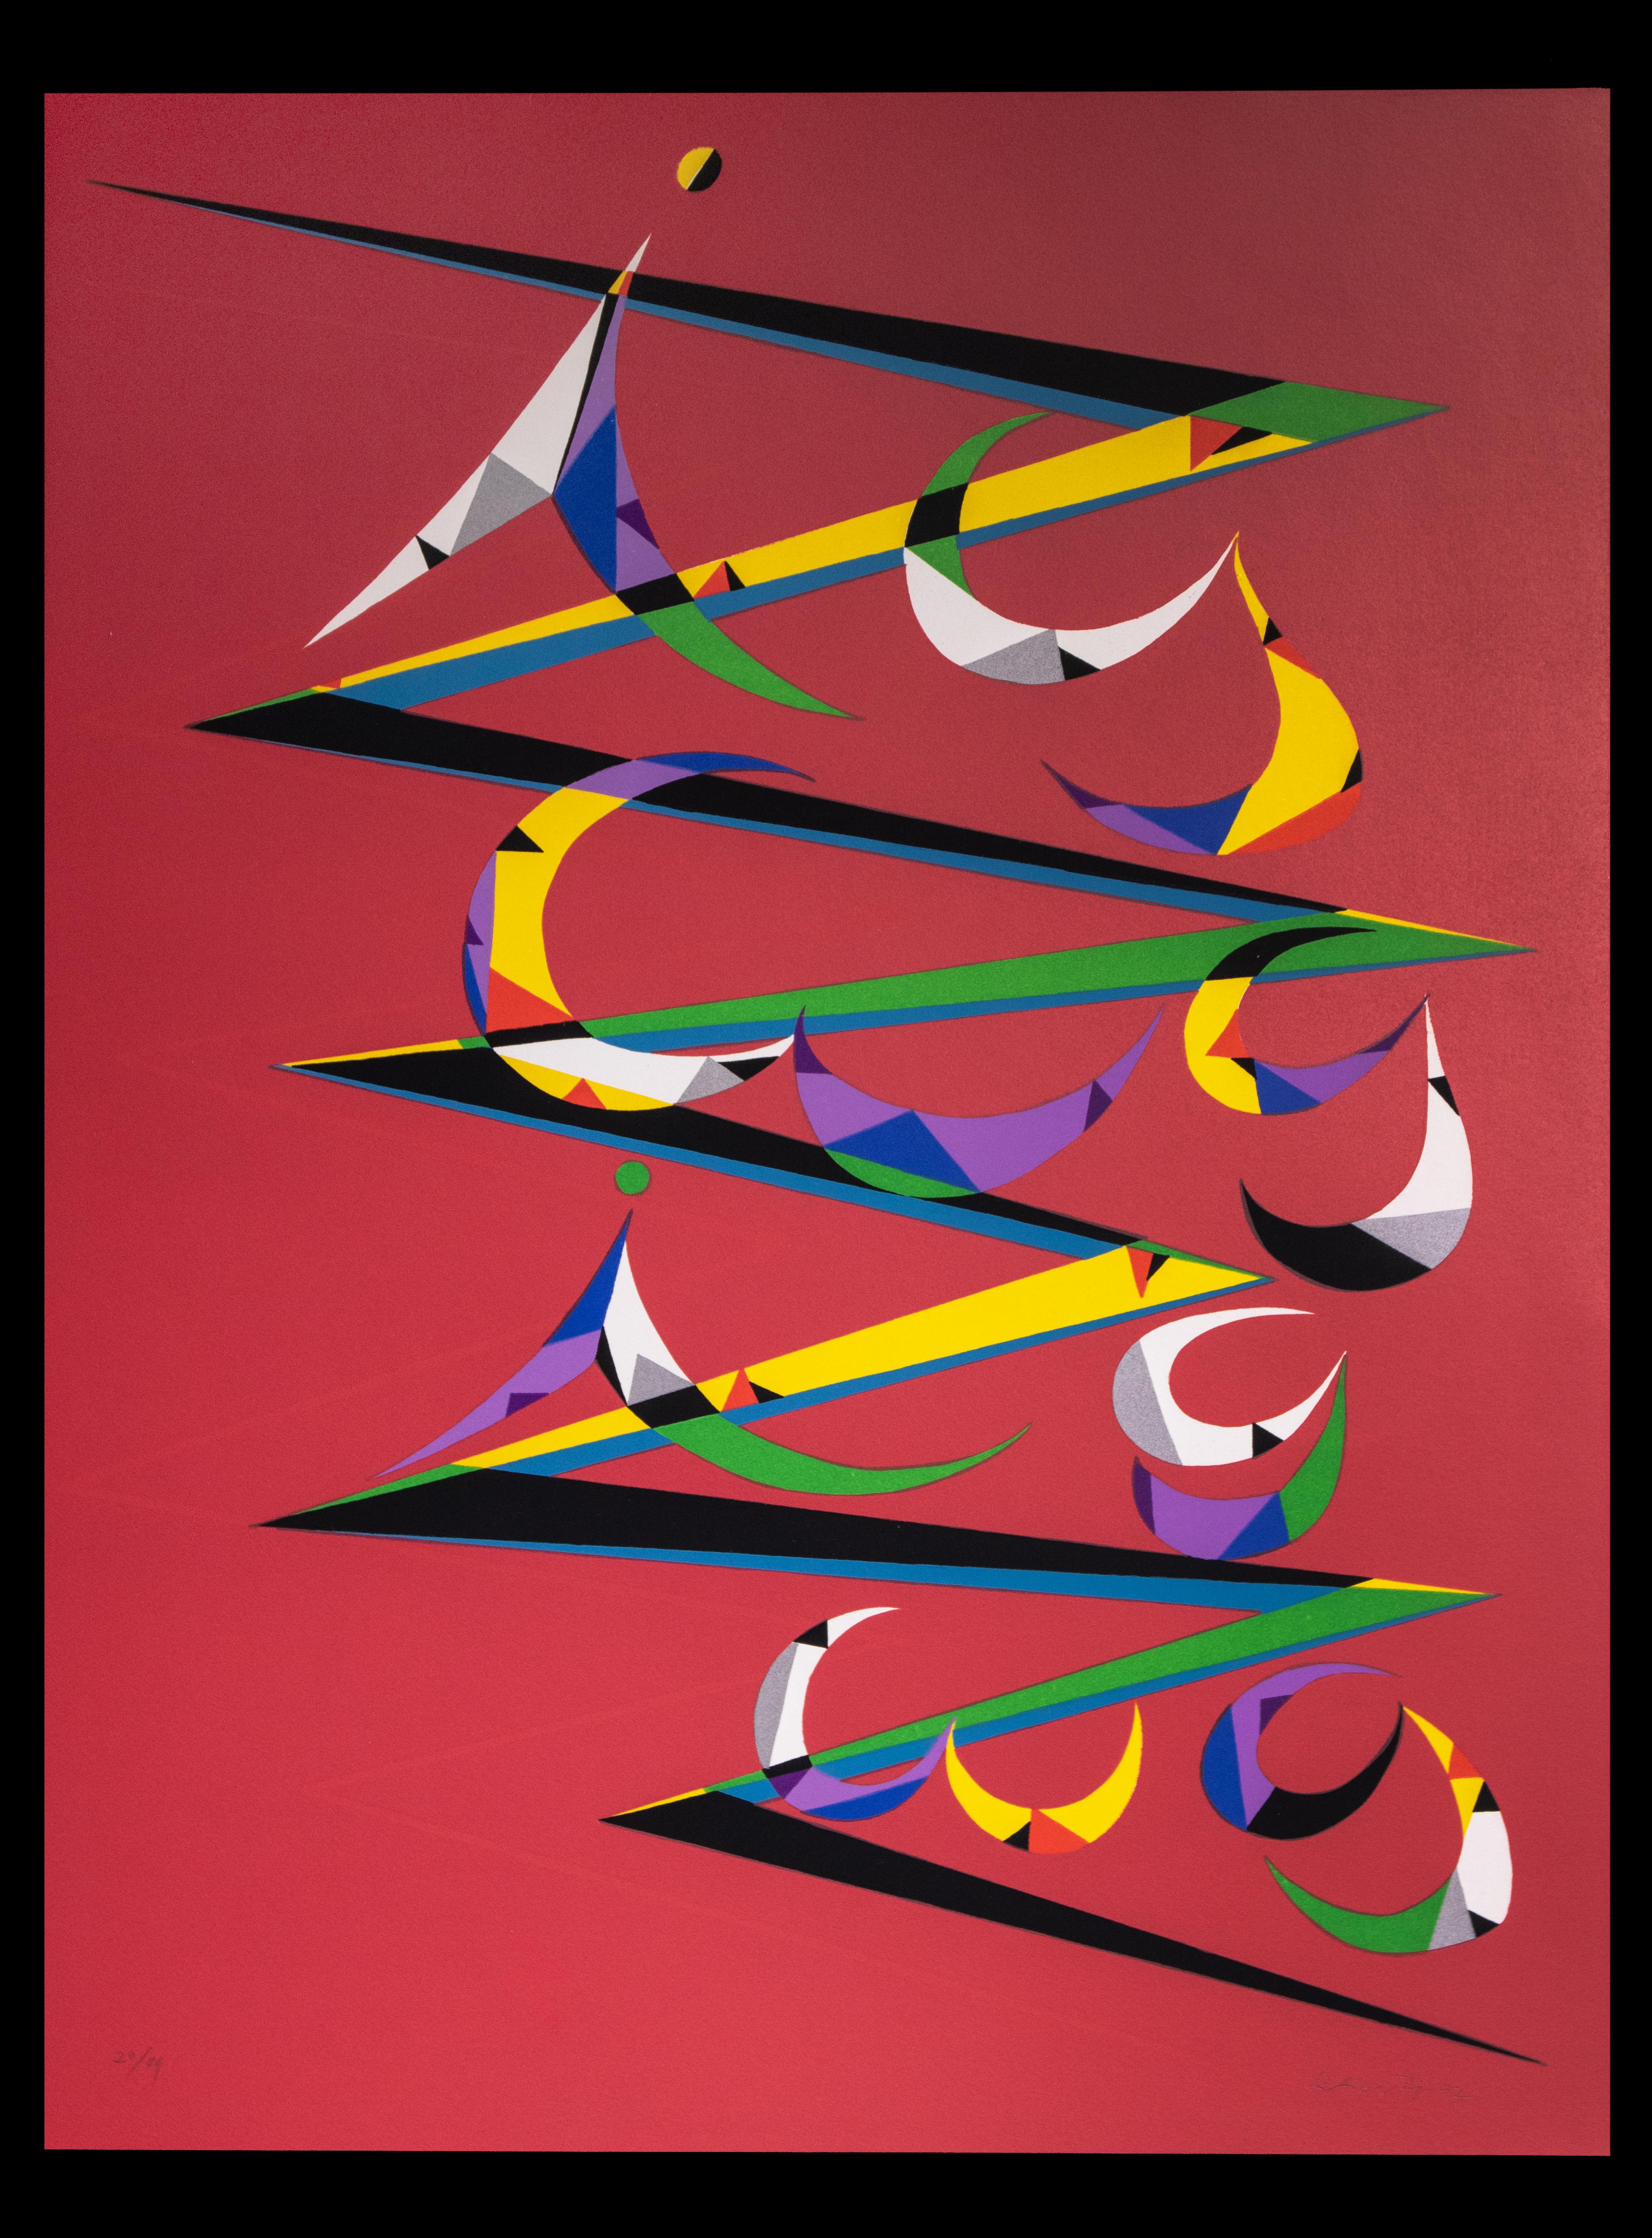 Letter Z - Original Lithograph by Raphael Alberti - 1972 - Print by Rafael Alberti